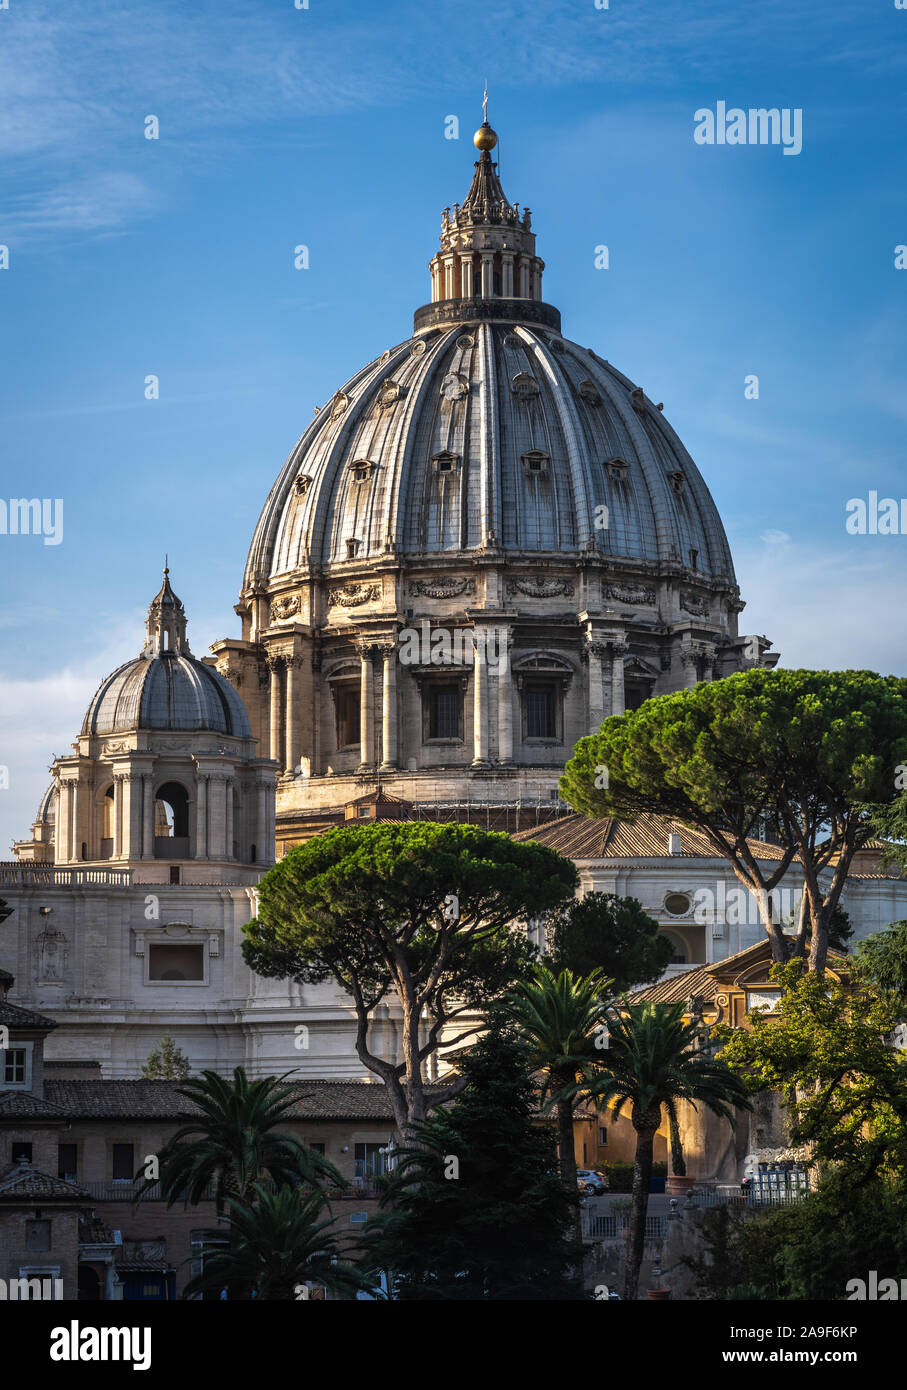 Kuppel des Petersdoms bei sonnigem Wetter. Grüne Bäume, blauer Himmel und Sain Peter Basilika im Vatikan. Stockfoto